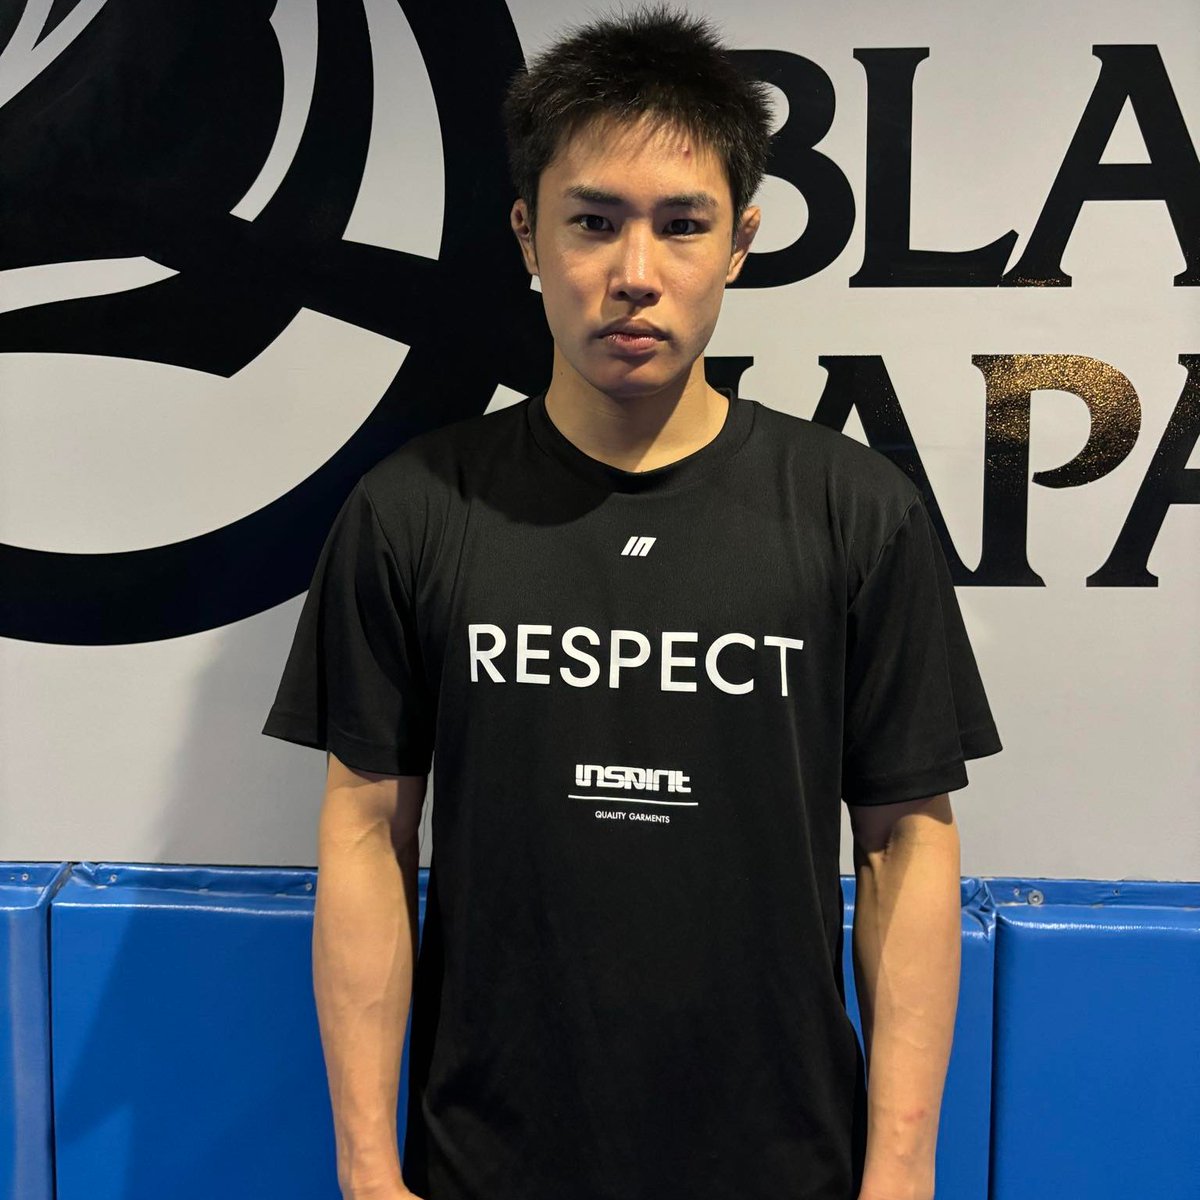 inspiritサポート 平良達郎 選手 RESPECT 『リスペクト』が無ければ何も生まれない。 inspiritのポリシー、TEAM inspirit のスタイルです。 inspirit.jp #平良達郎 #UFC #沖縄から世界へ